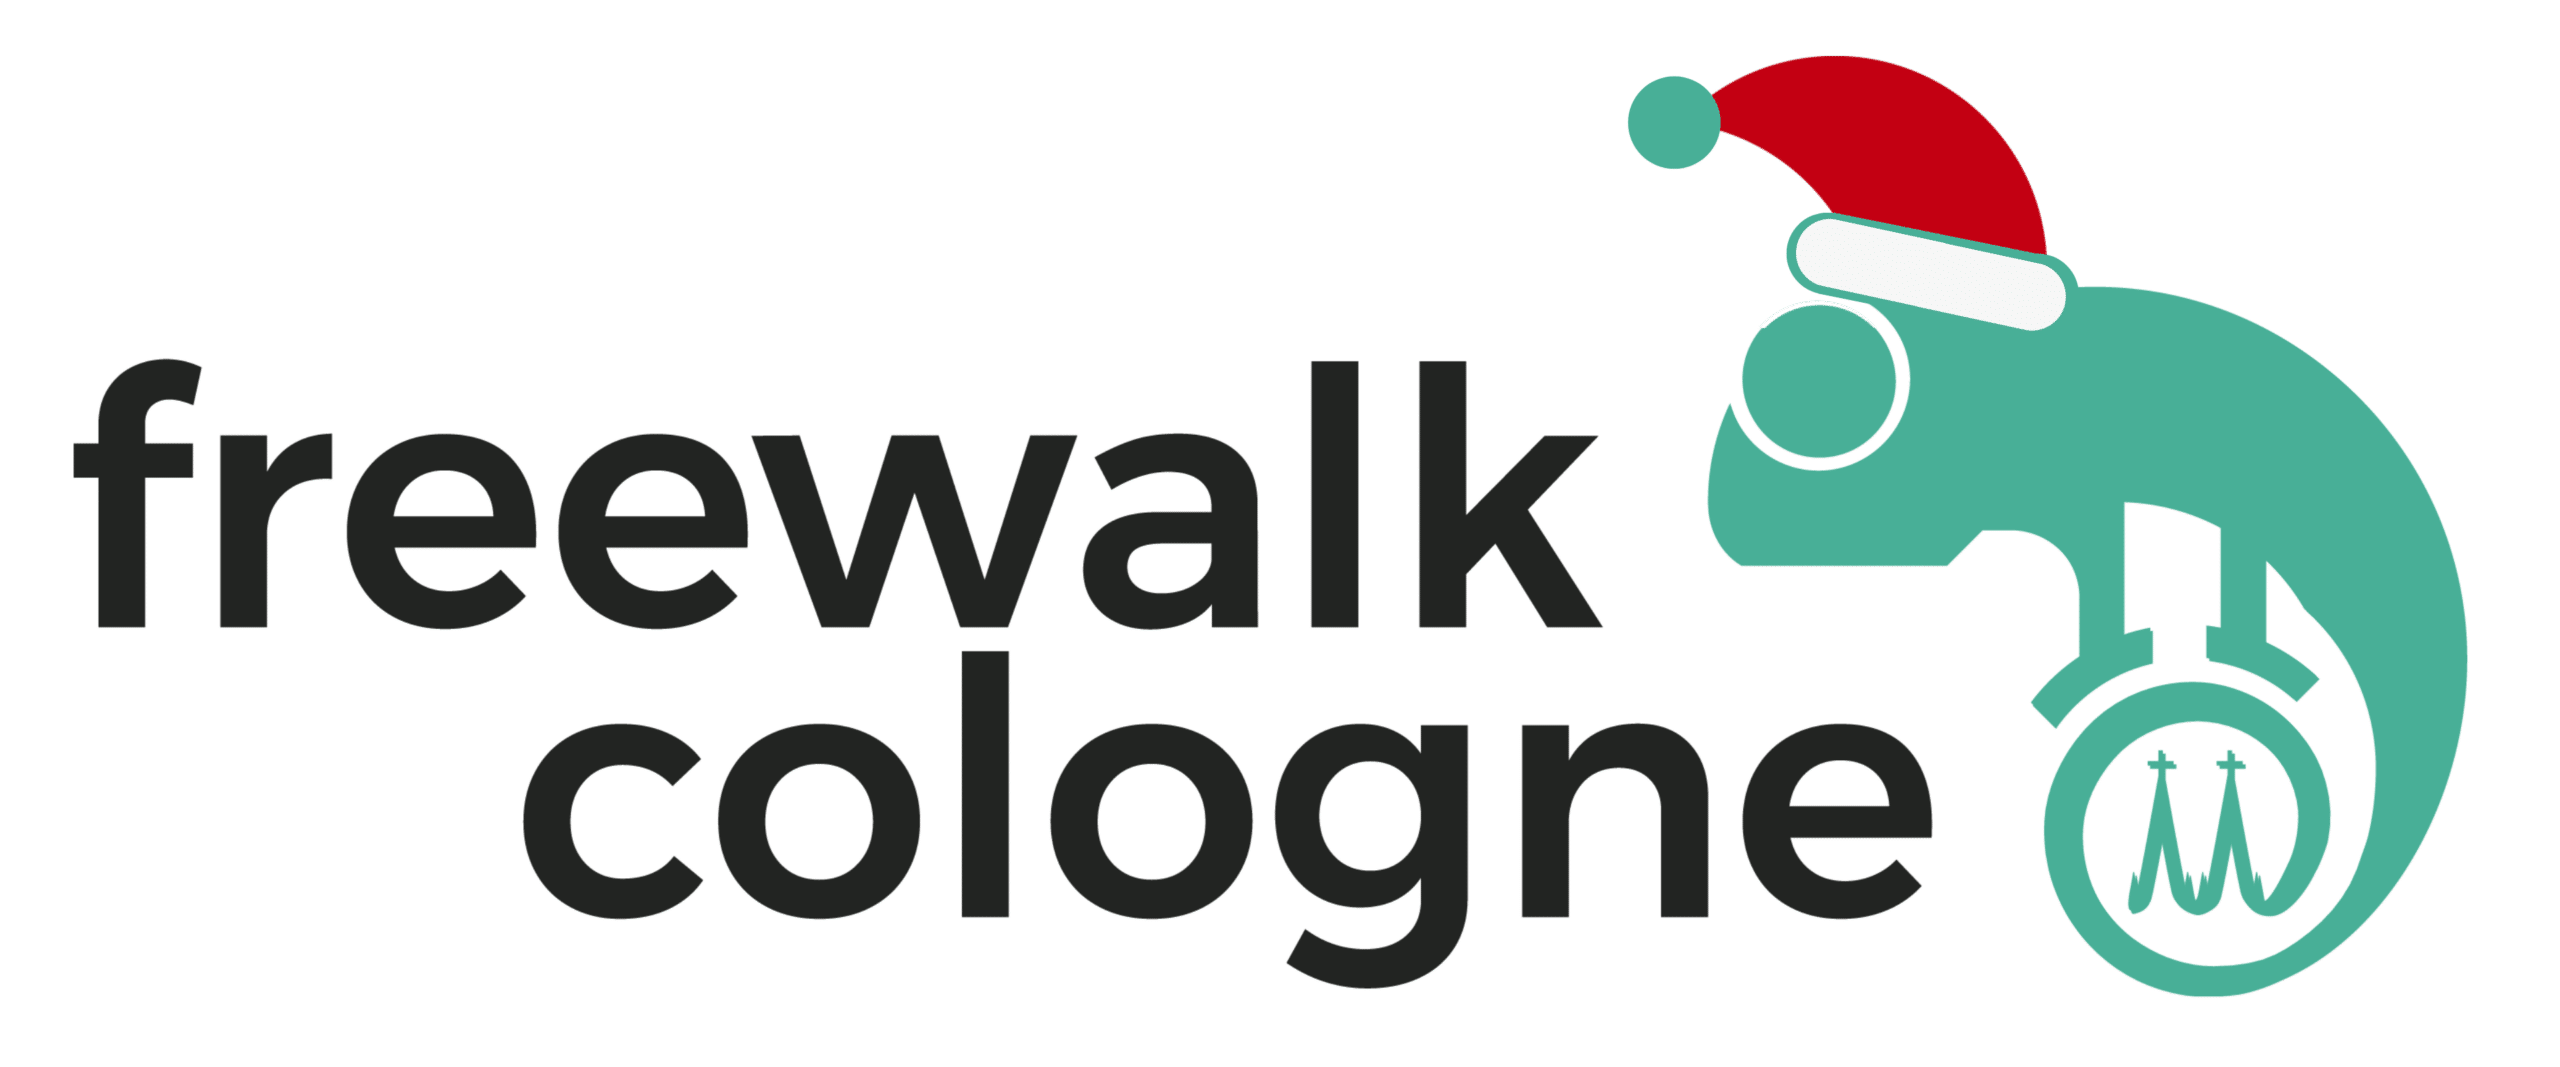 Freewalk Cologne